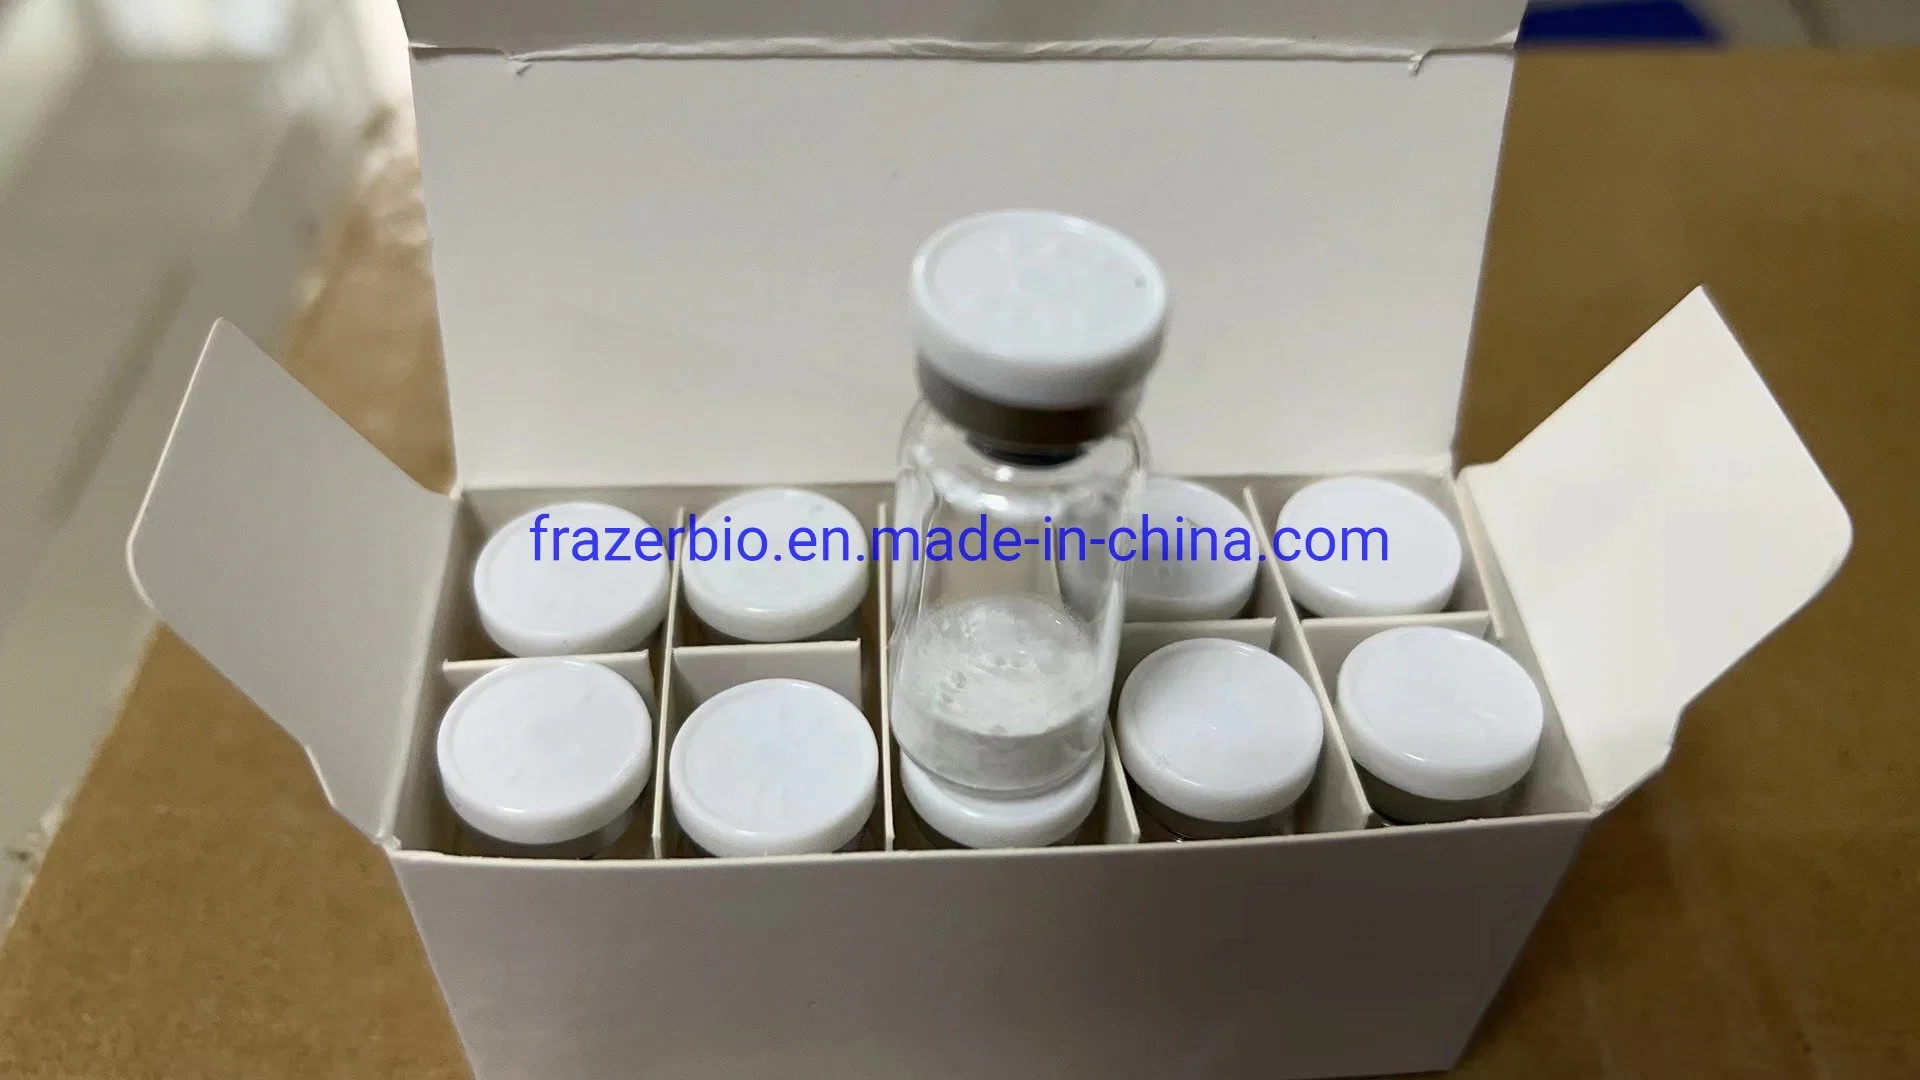 Chinese Hot Selling Tirzepatide Lyophilized Injection Peptides